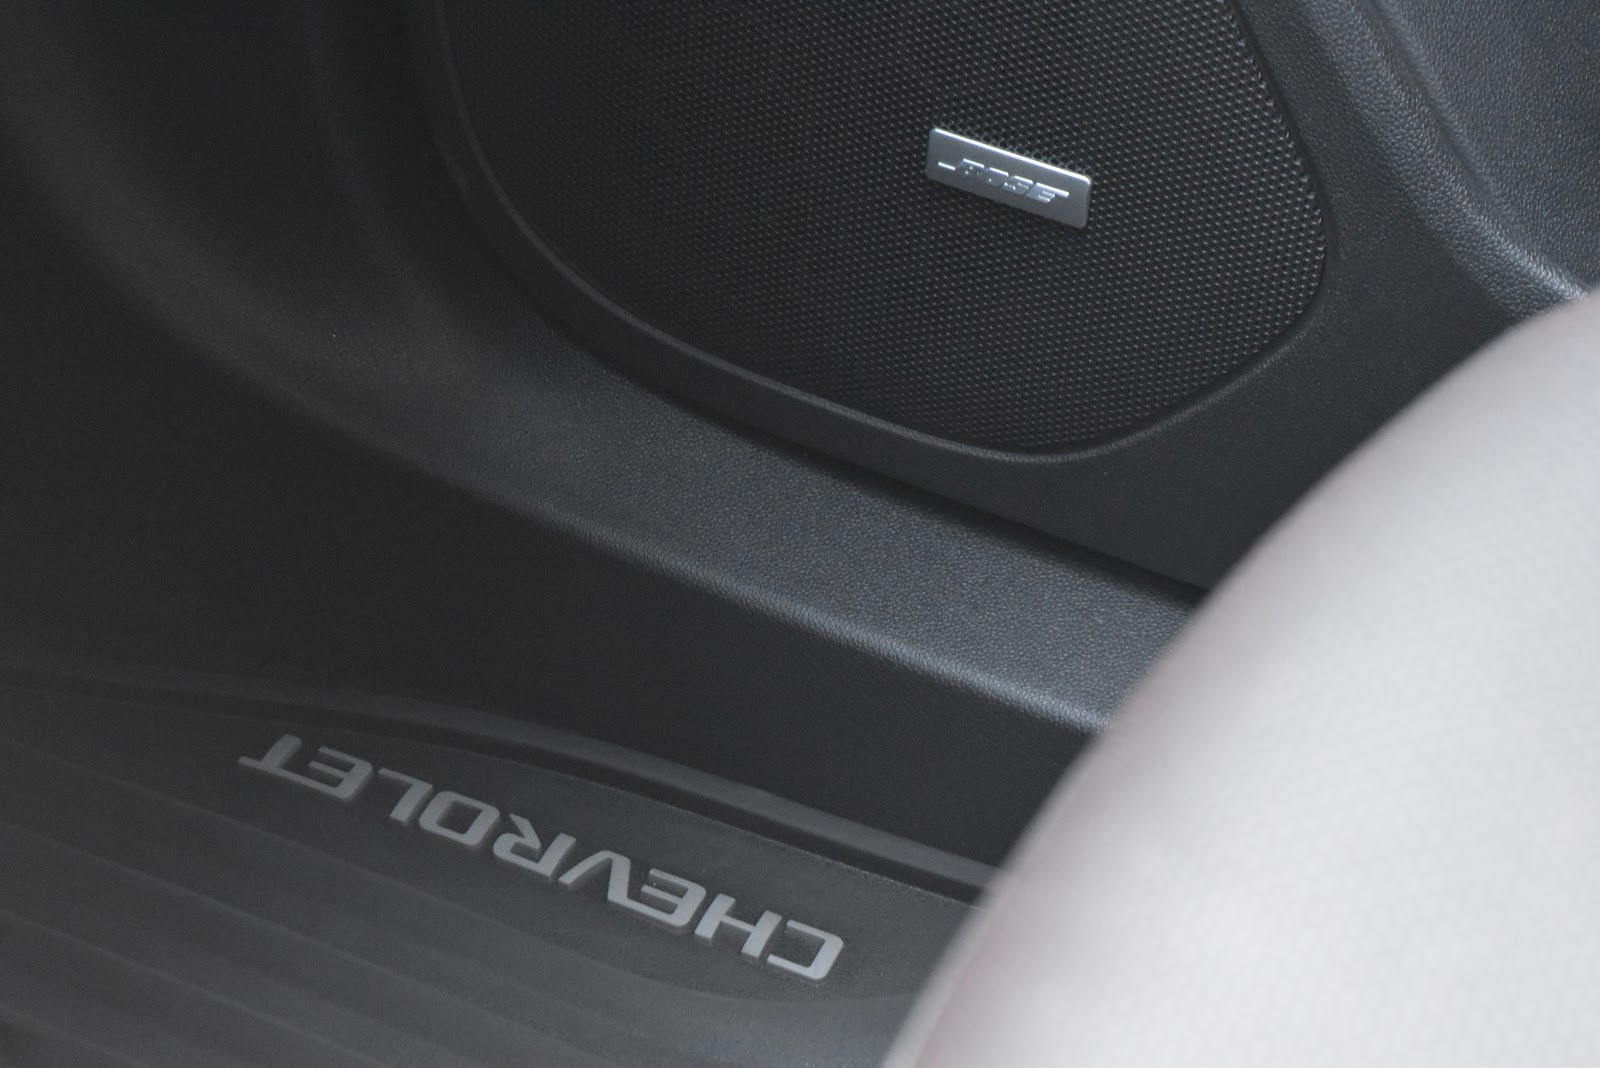 2019 Chevy Blazer Bose Speakers